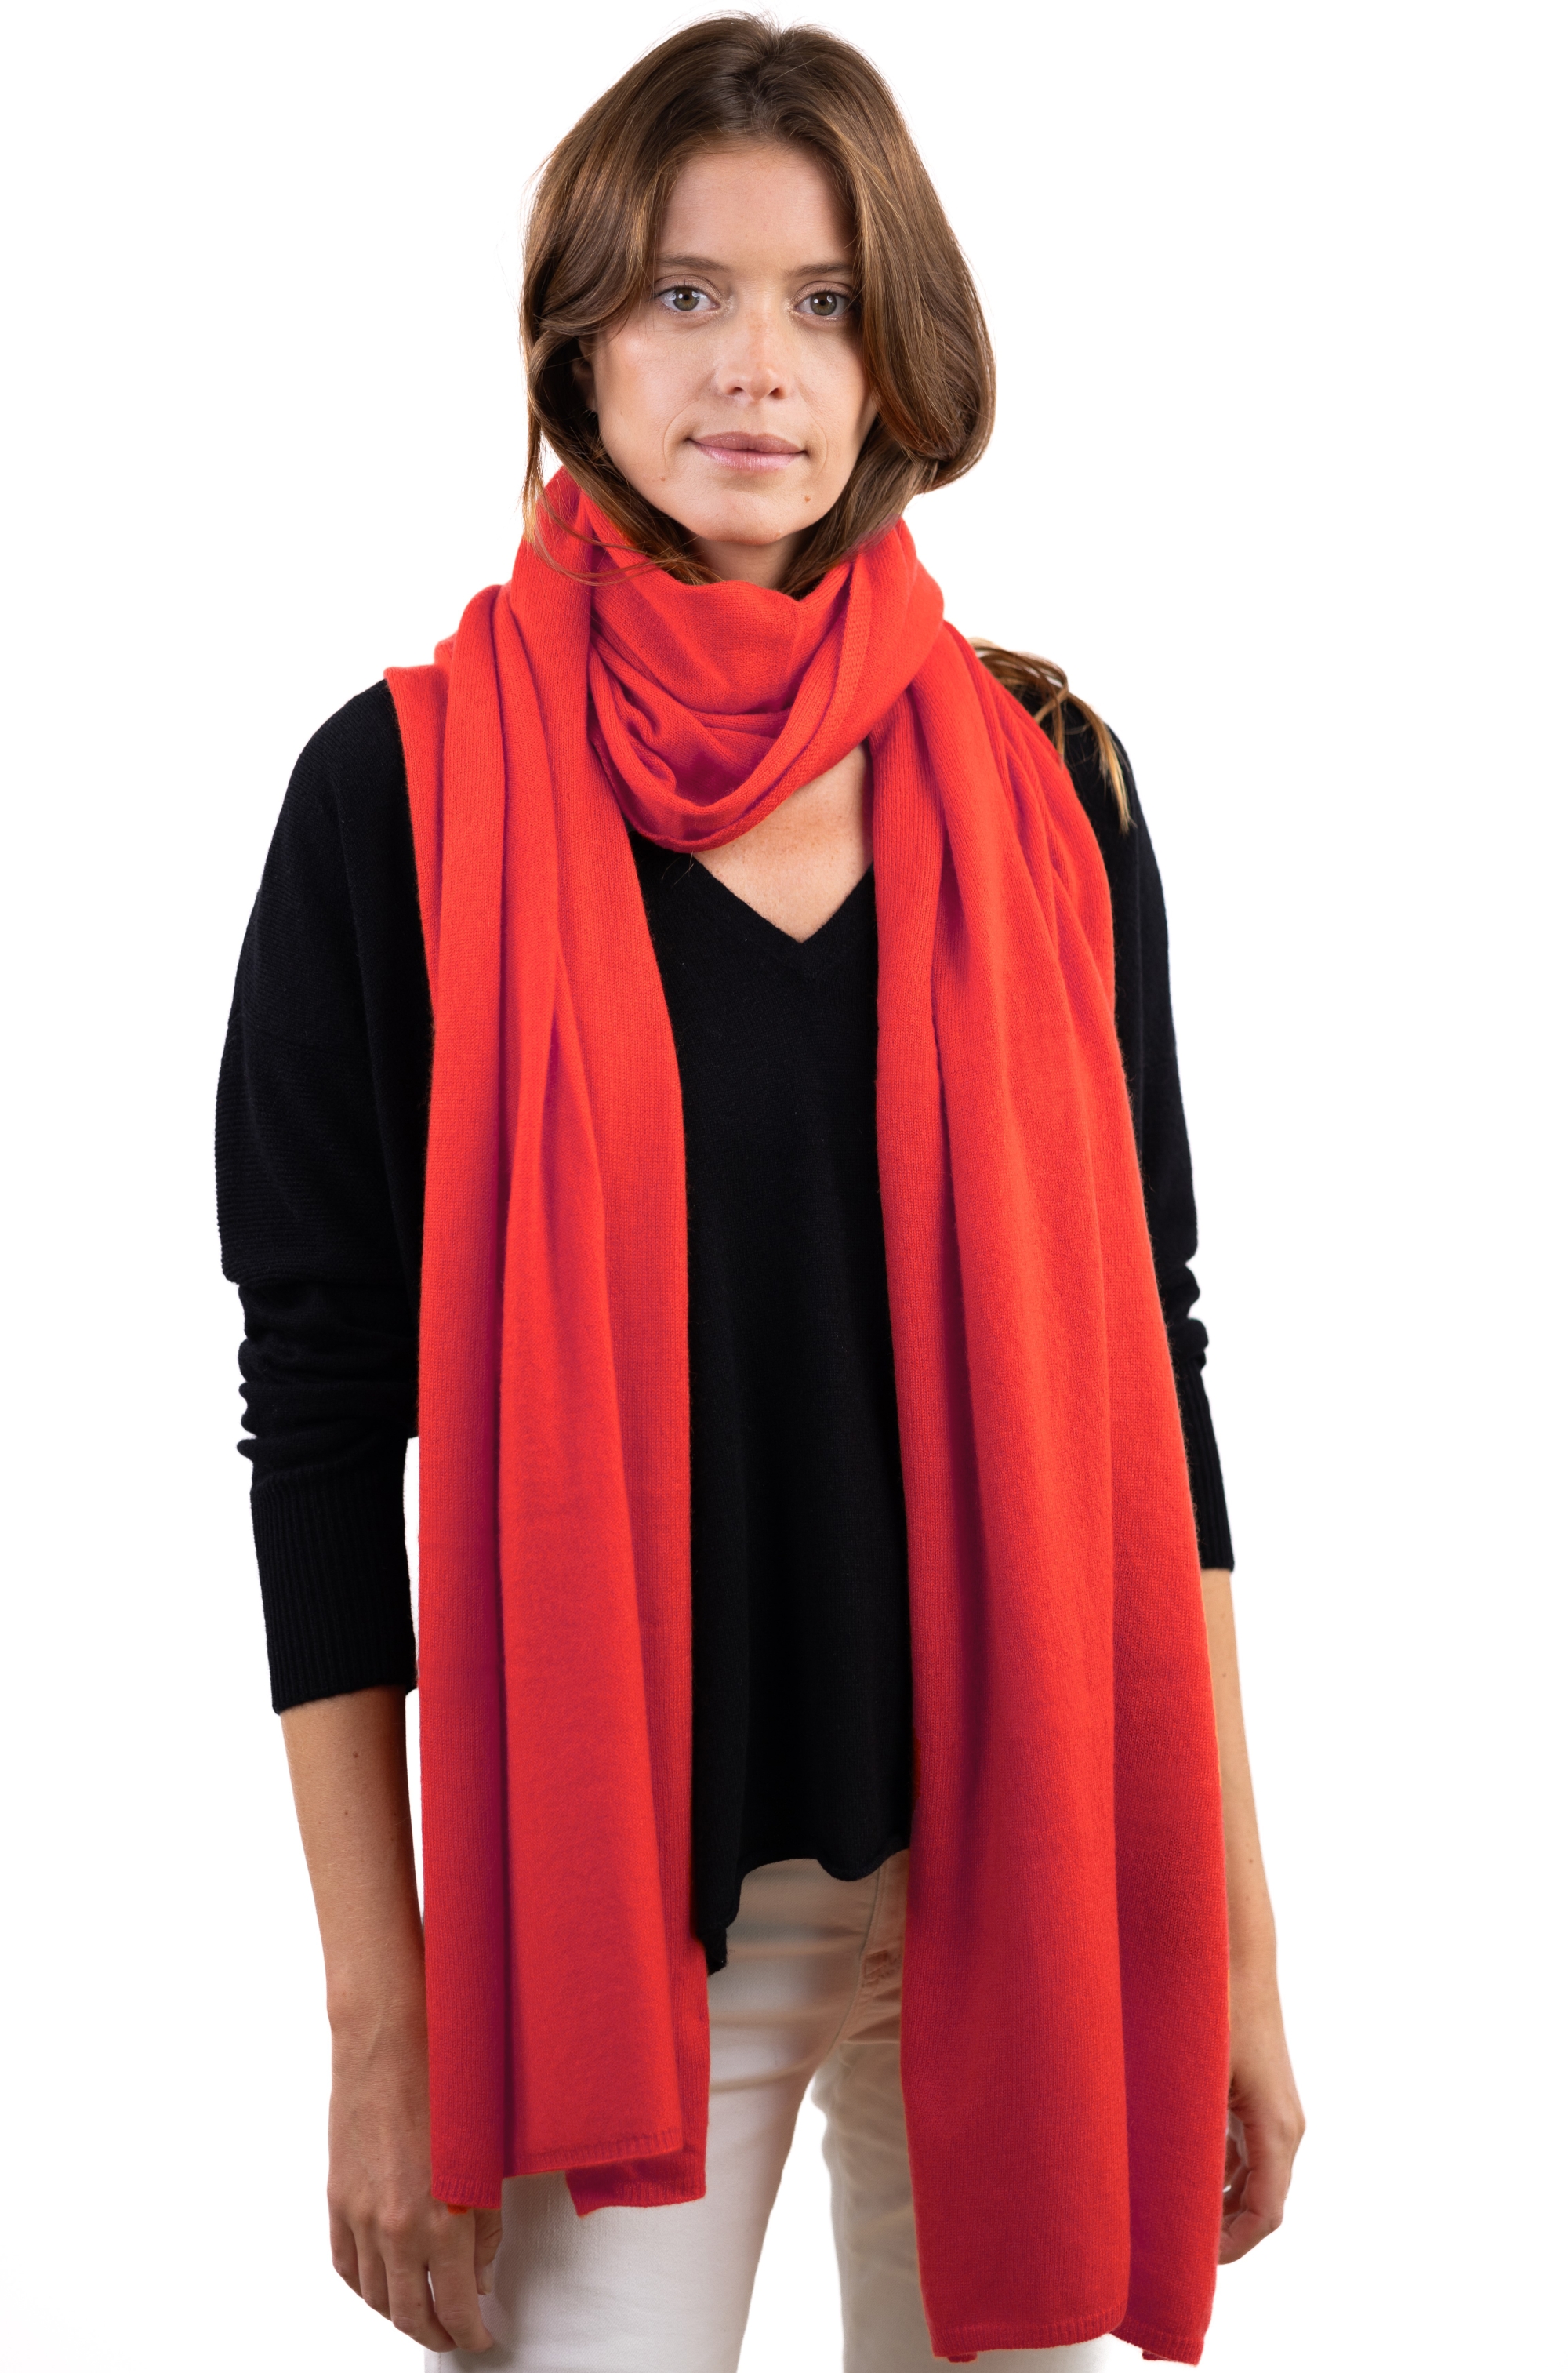 Cashmere ladies scarves mufflers wifi rouge 230cm x 60cm